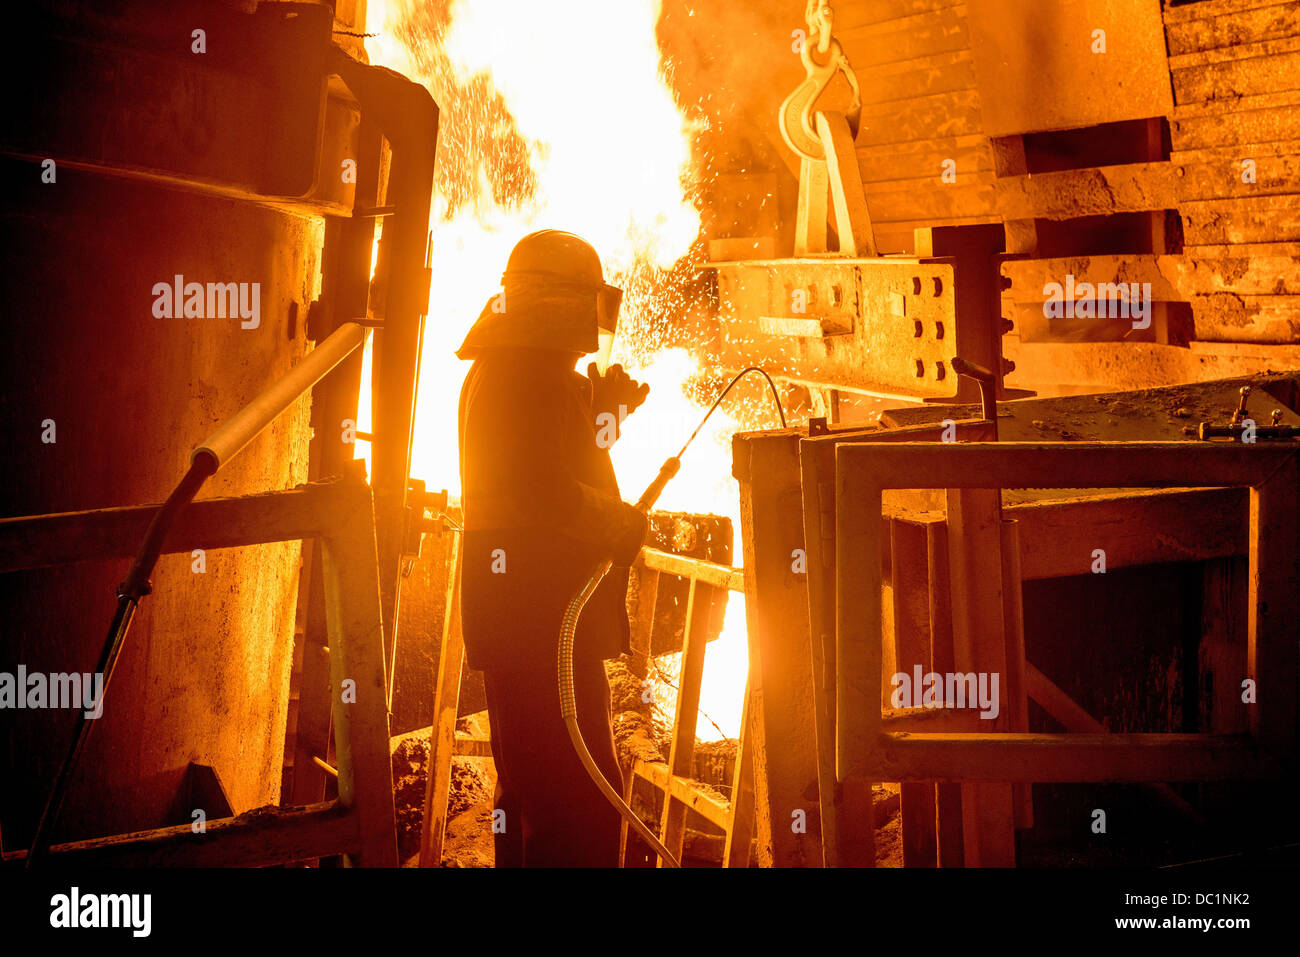 Steel worker in front of furnace fire in steel foundry Stock Photo